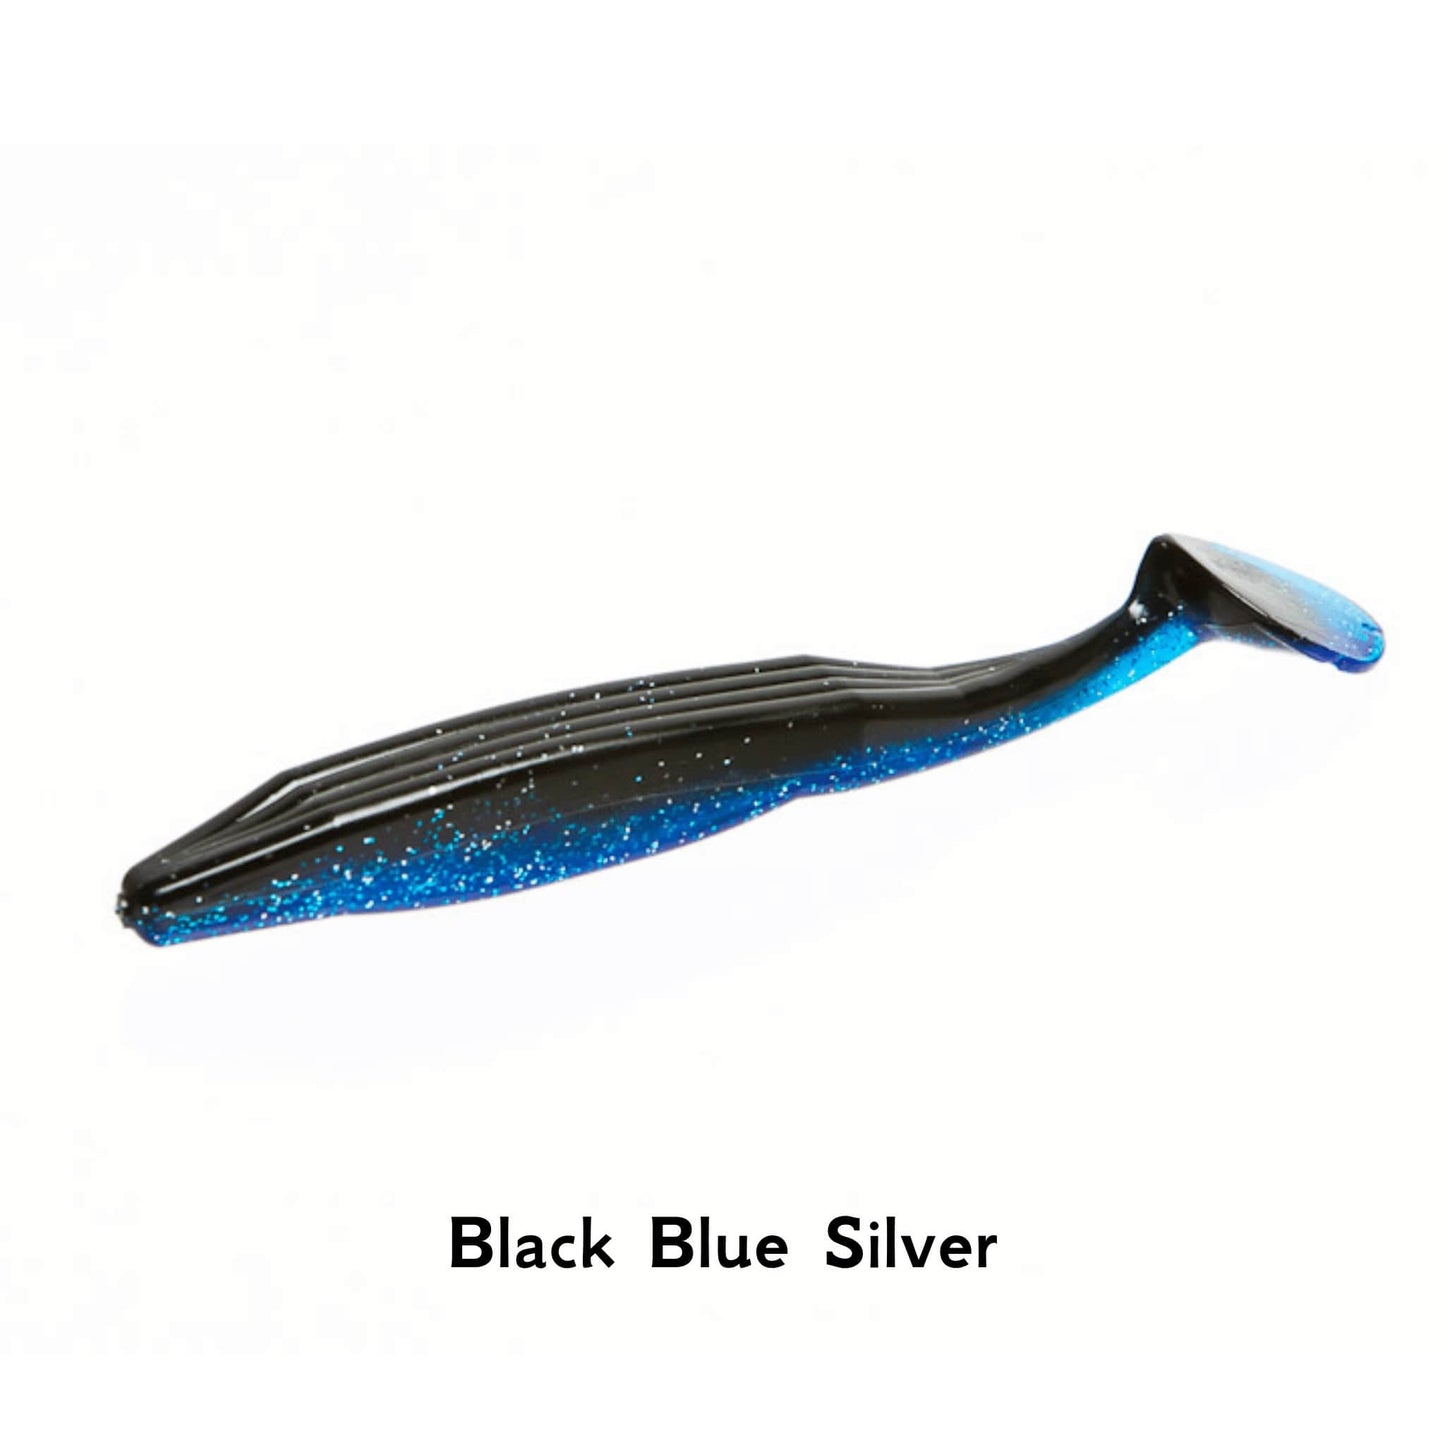 Zoom Swimmin Super Fluke Black BLue Silver 4 Inch 5pcs Soft Bait Fishing Lure ALL COLOURS Paddle Tail Jig Dropshot Lure Texas Carolina Rig Cheb